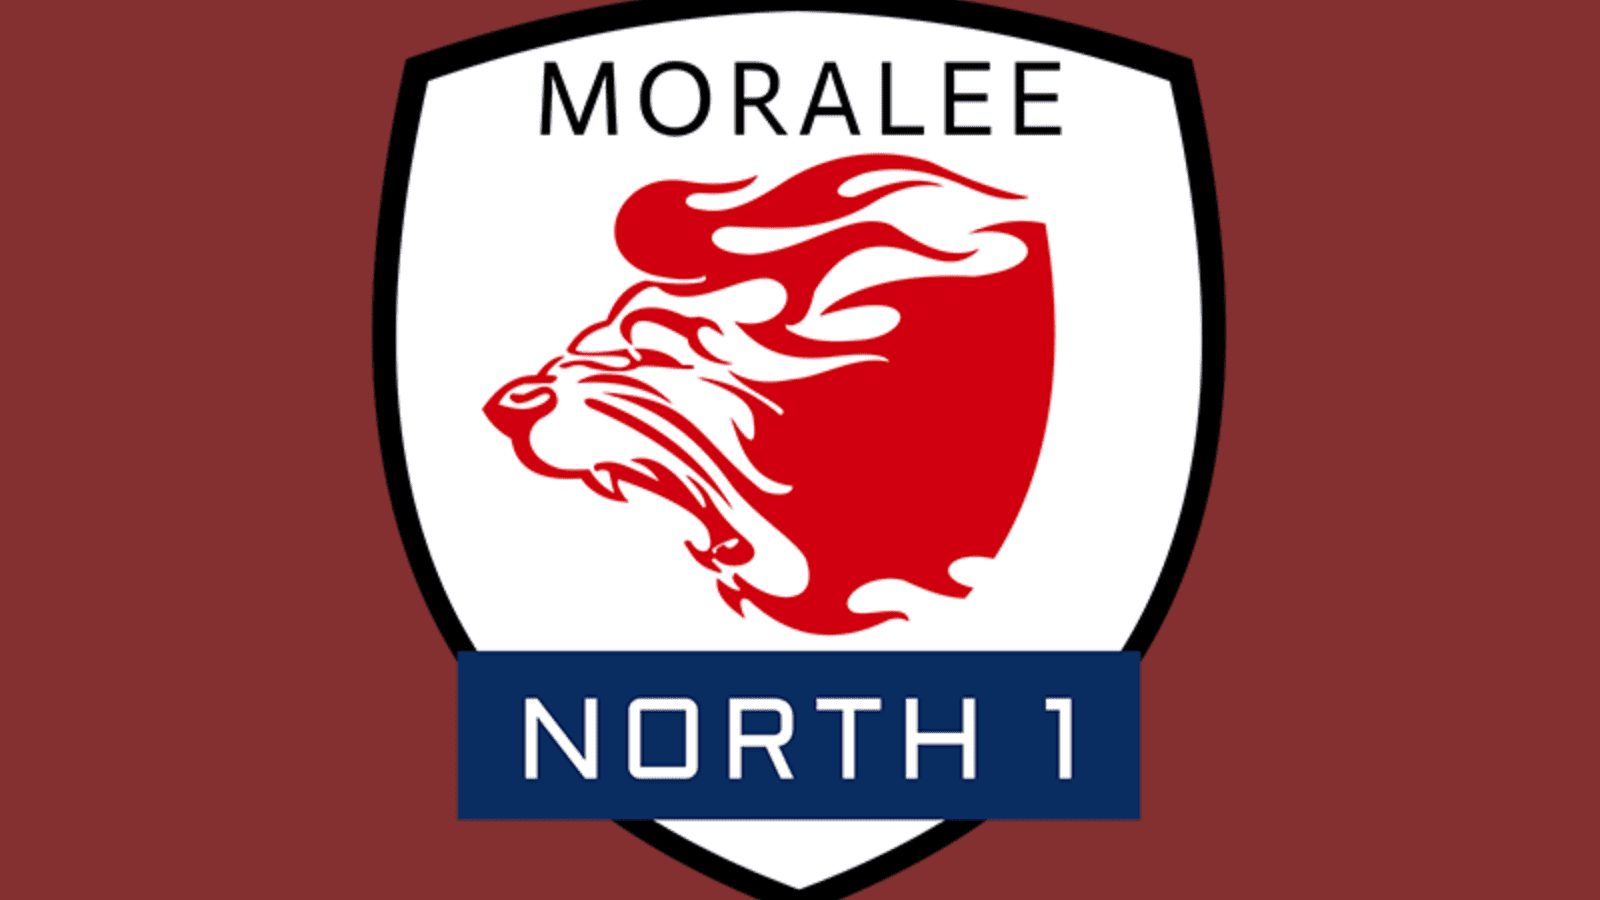 Moralee North 1 Division logo